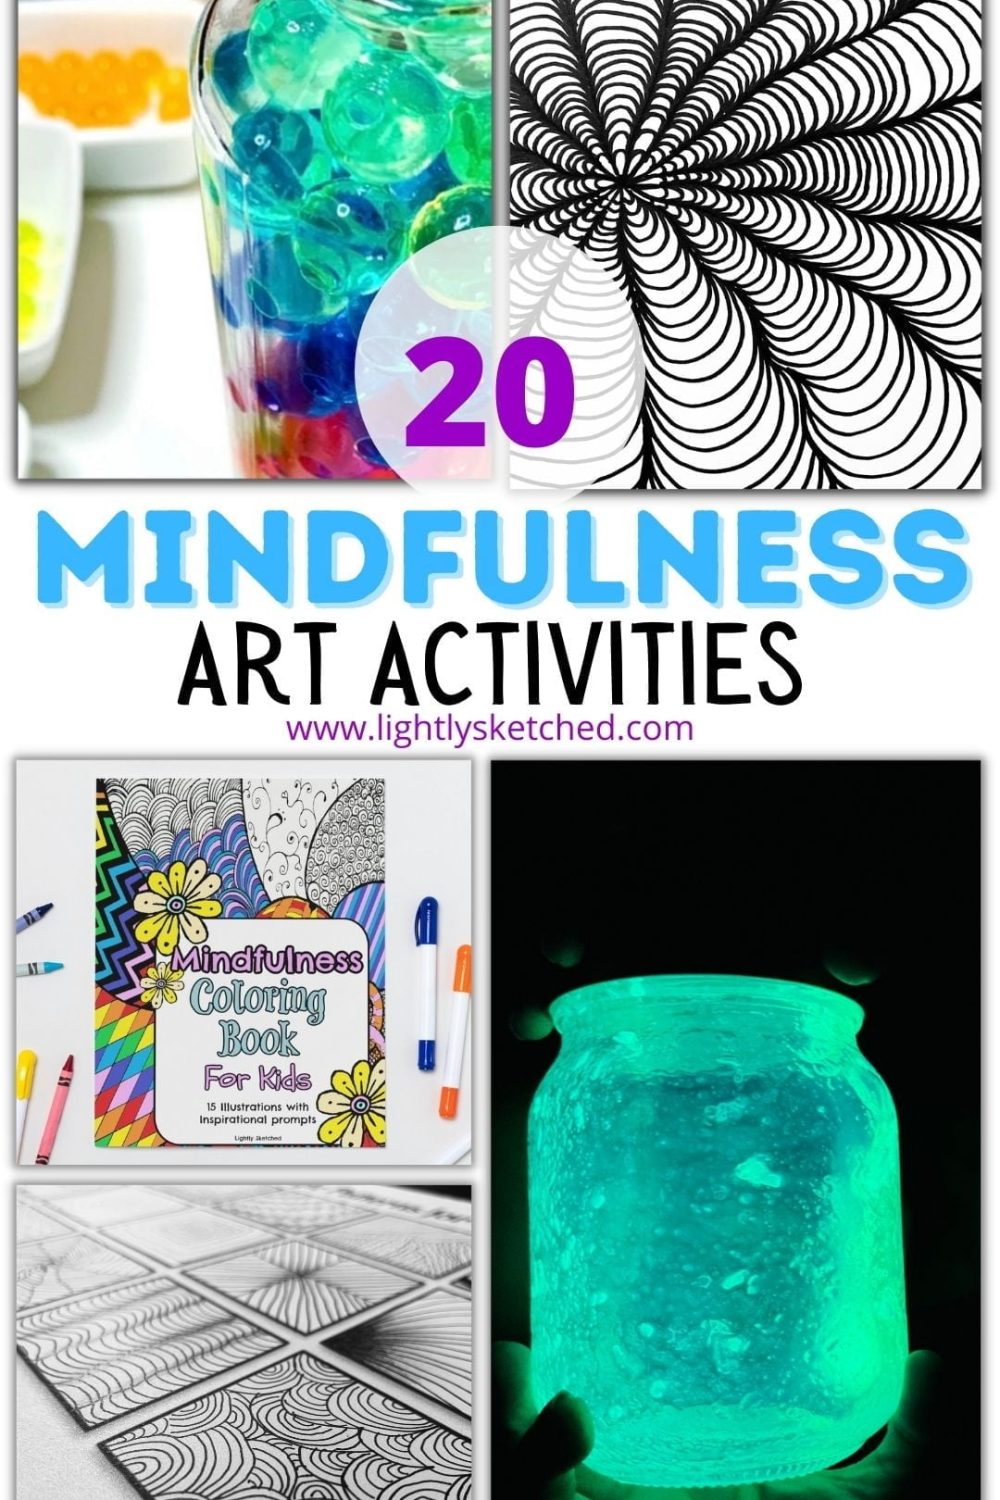 Mindfulness Art Activities